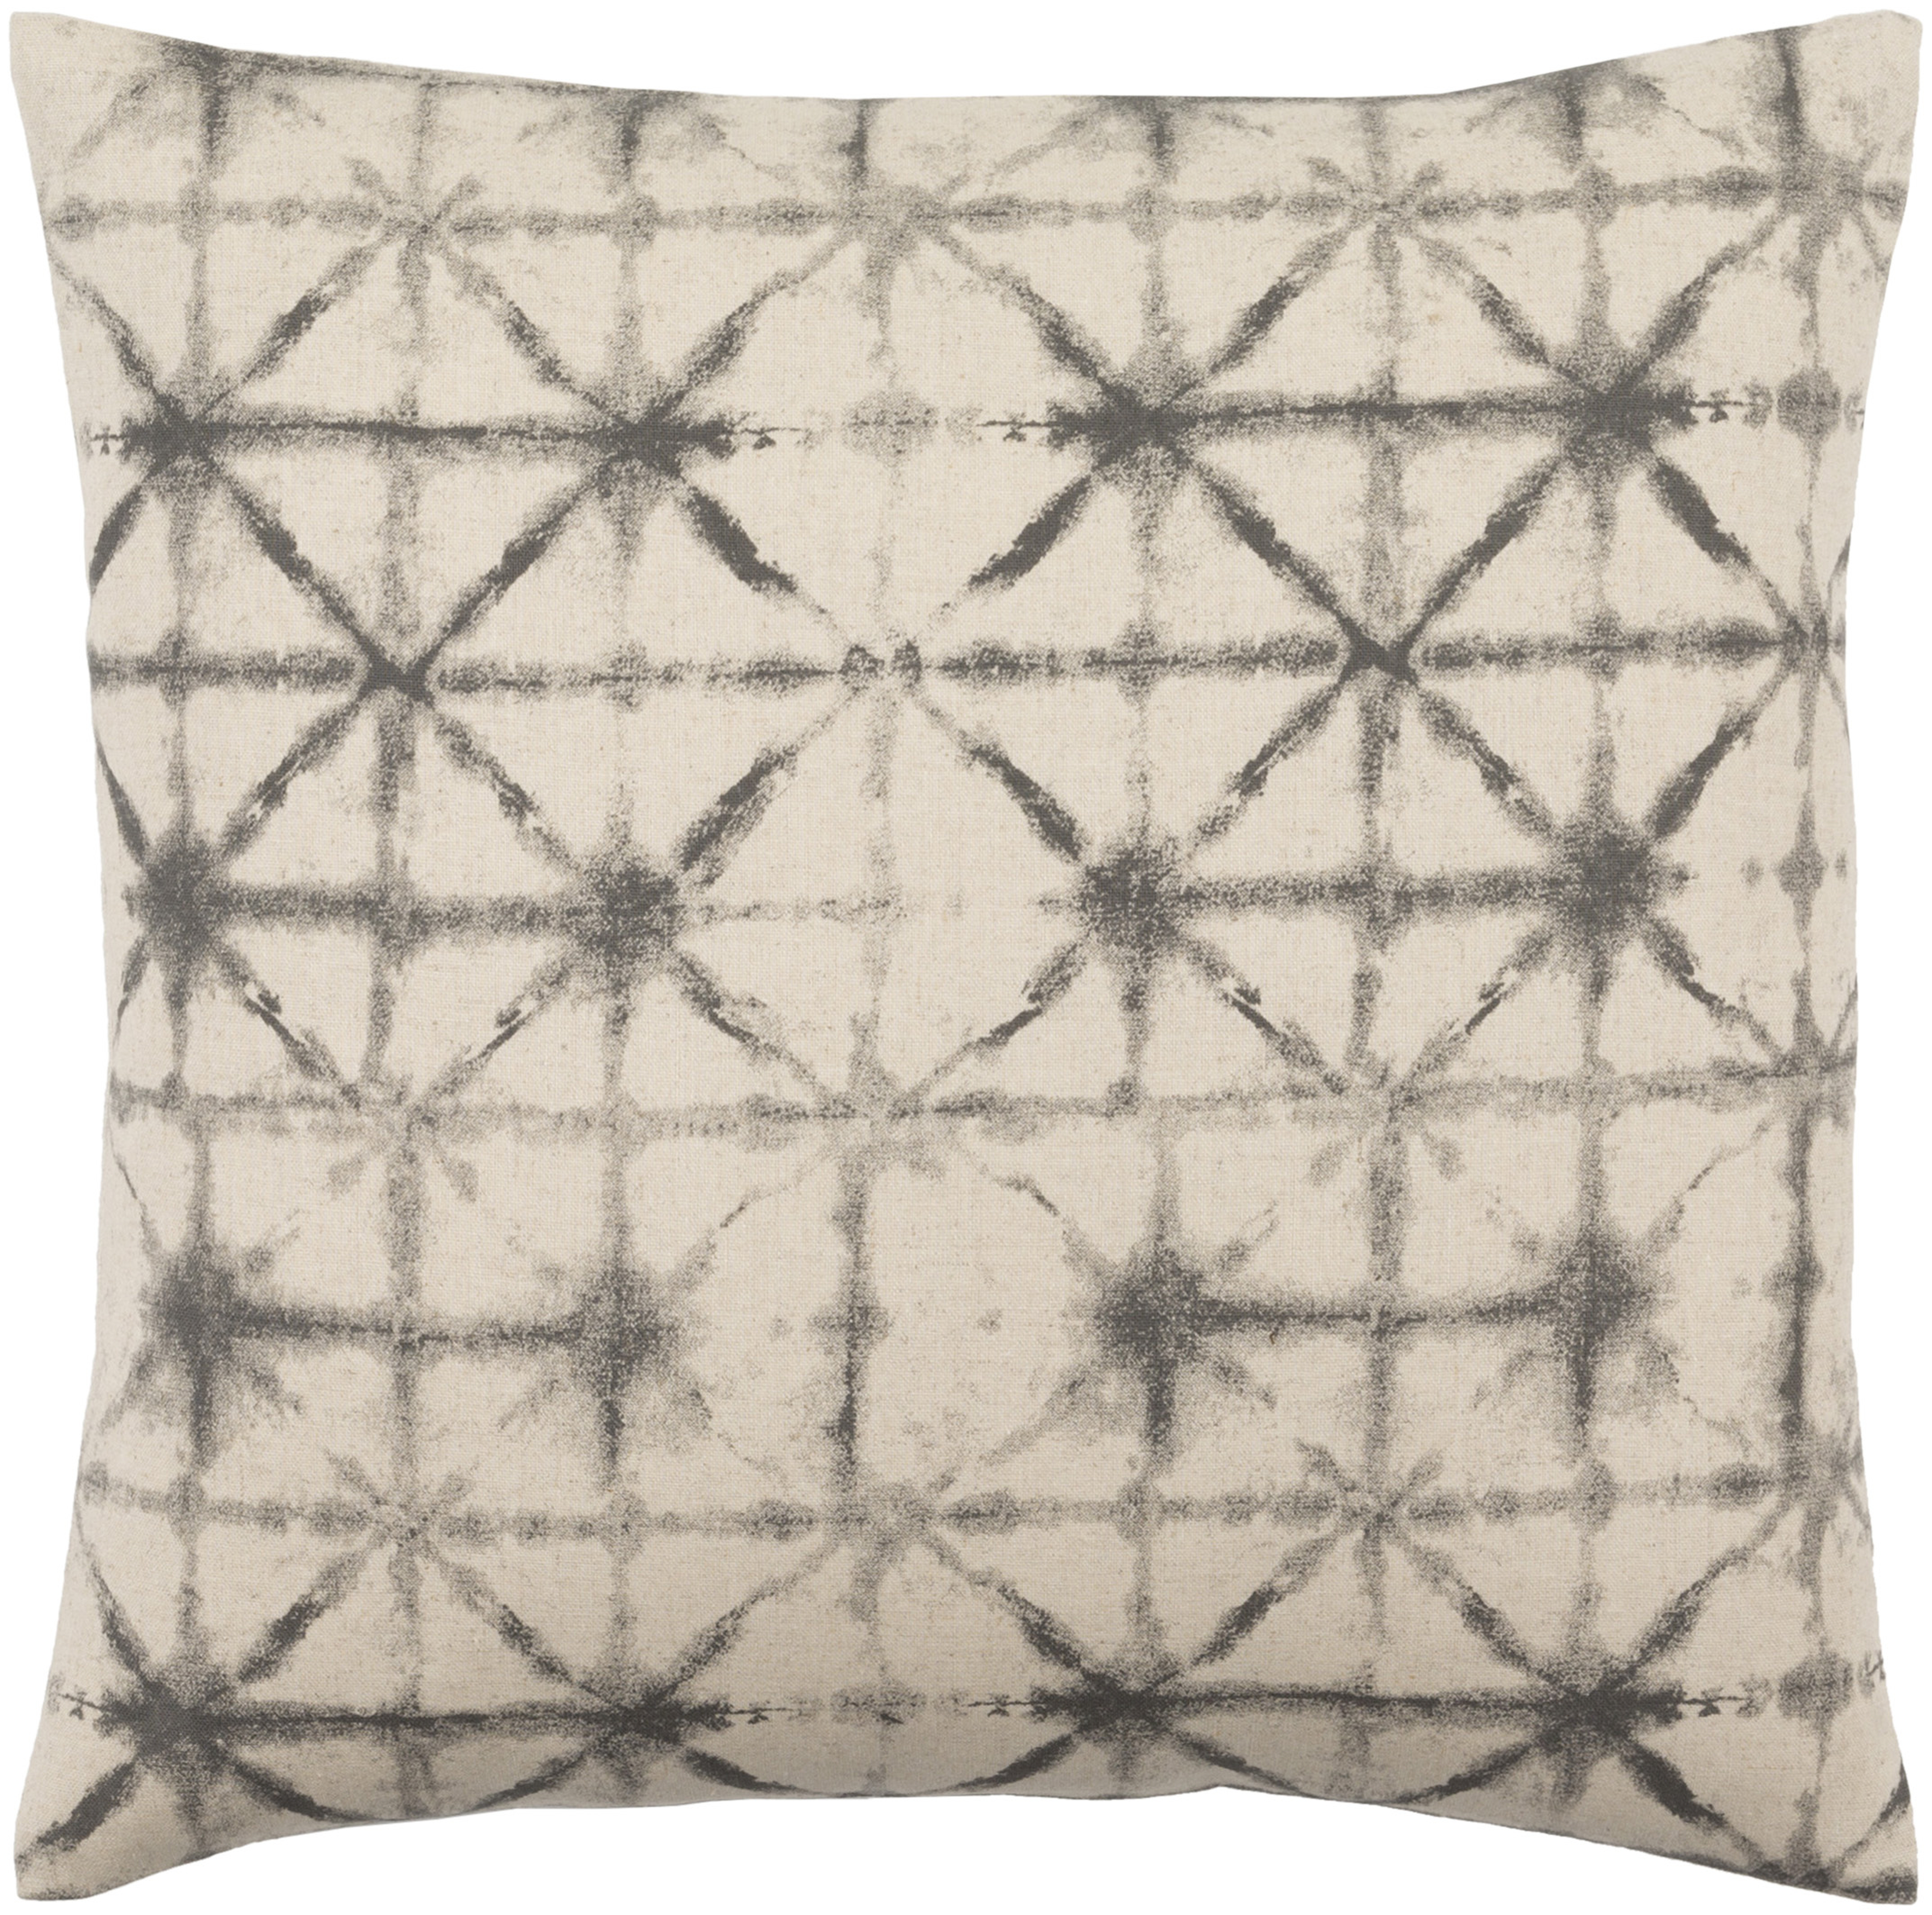 Nebula Throw Pillow, 18" x 18", with down insert - Surya